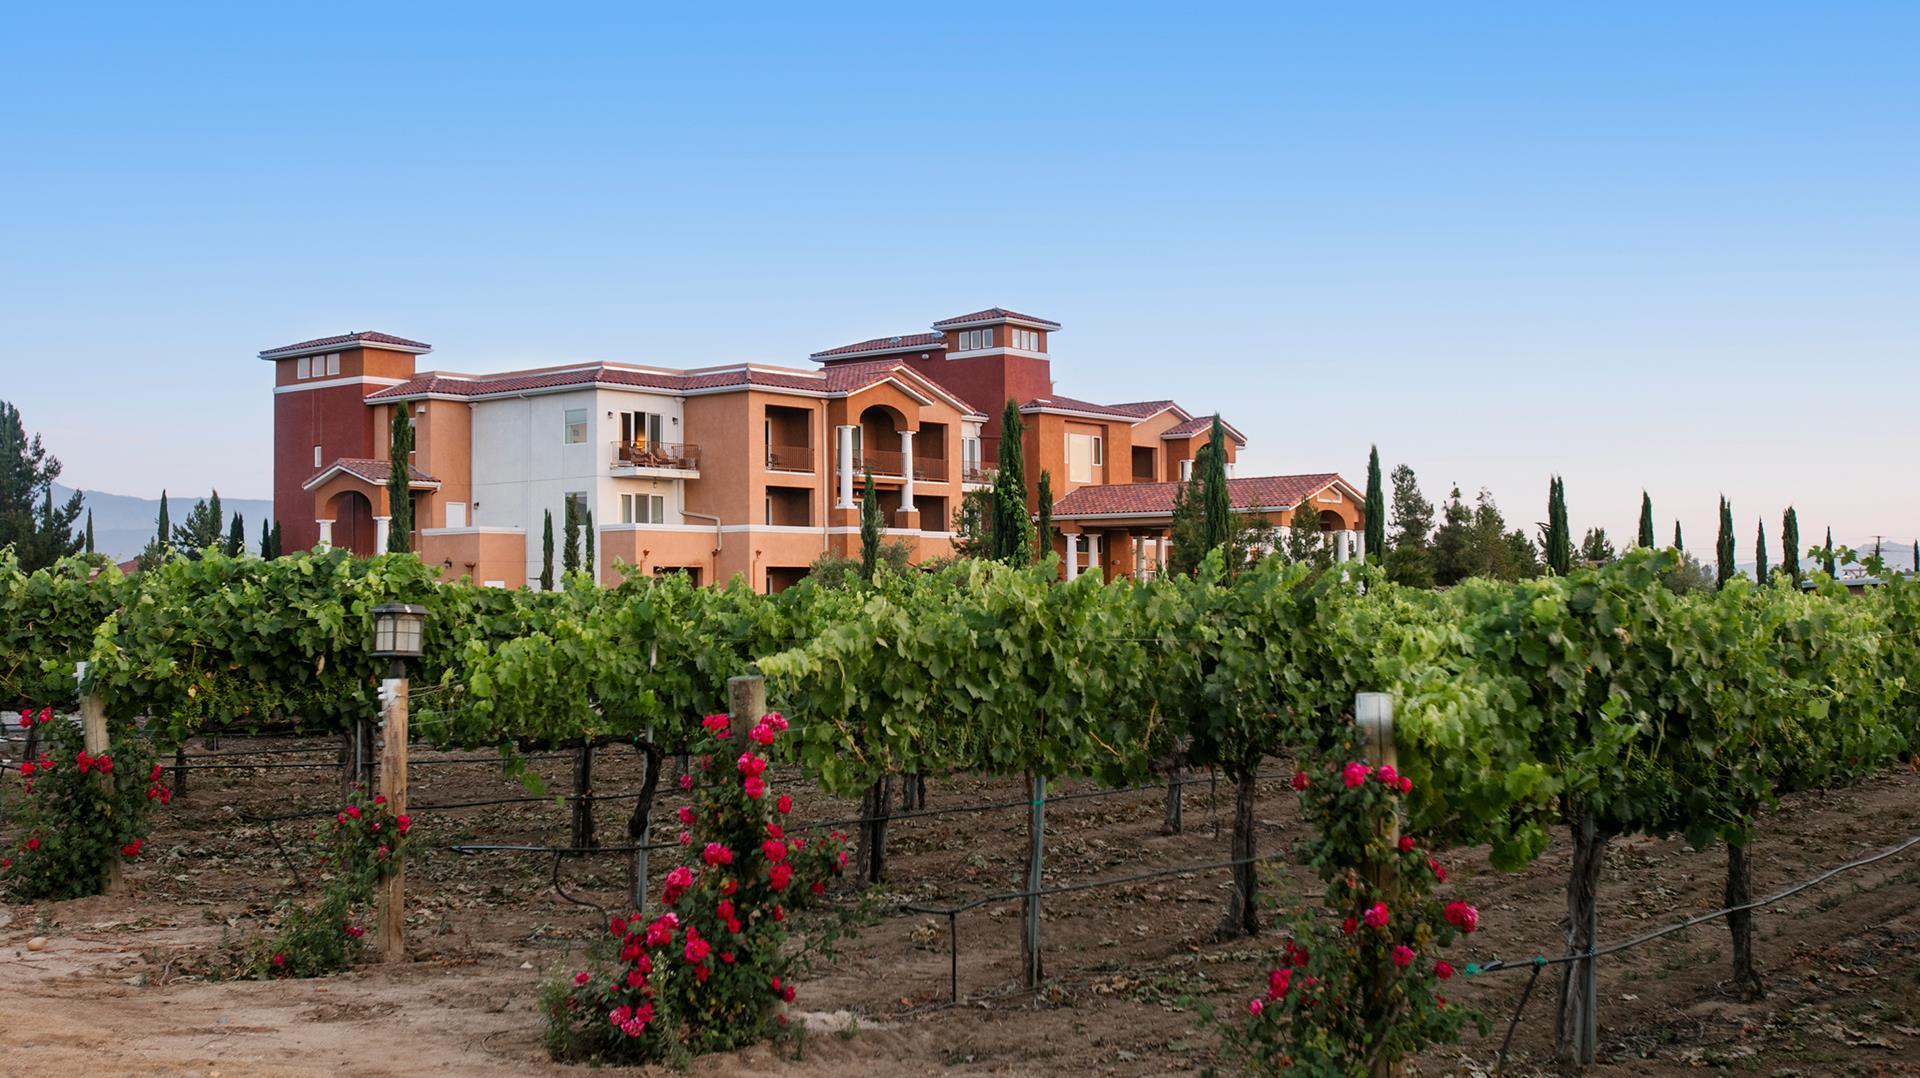 South Coast Winery Resort & Spa in Temecula, CA